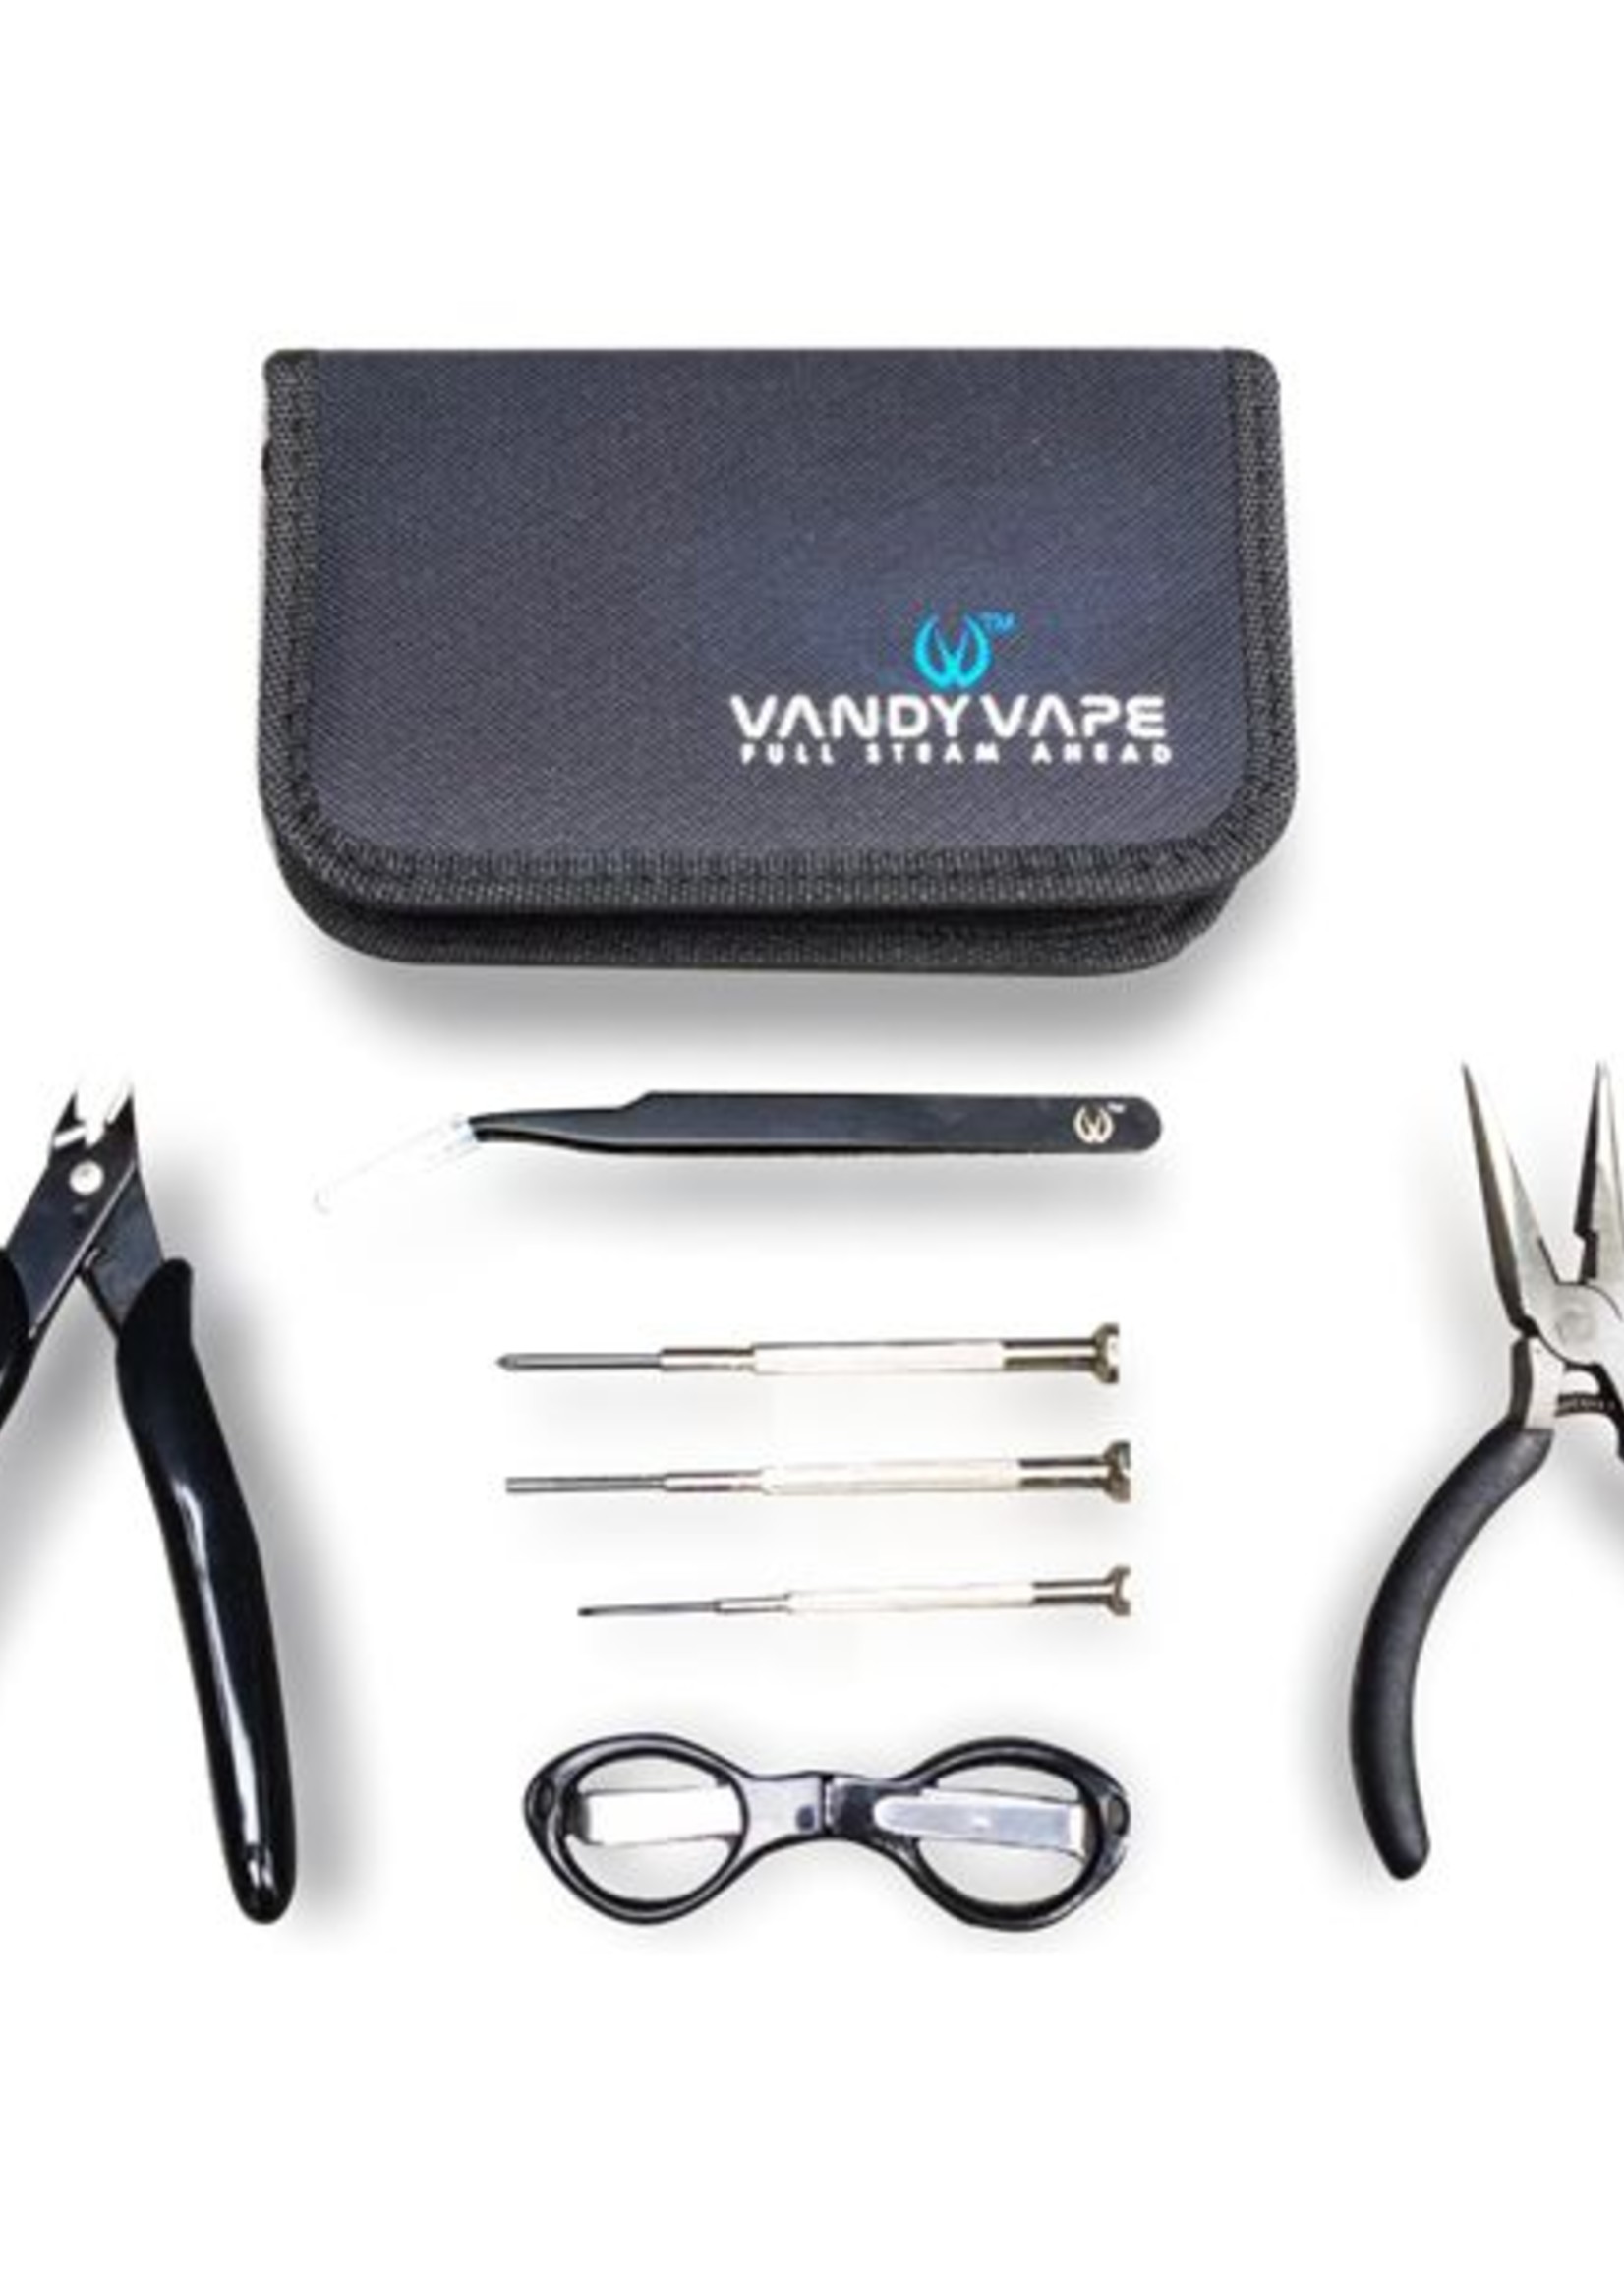 Vandy Vape Vandy Vape Build Kit CLEARANCE